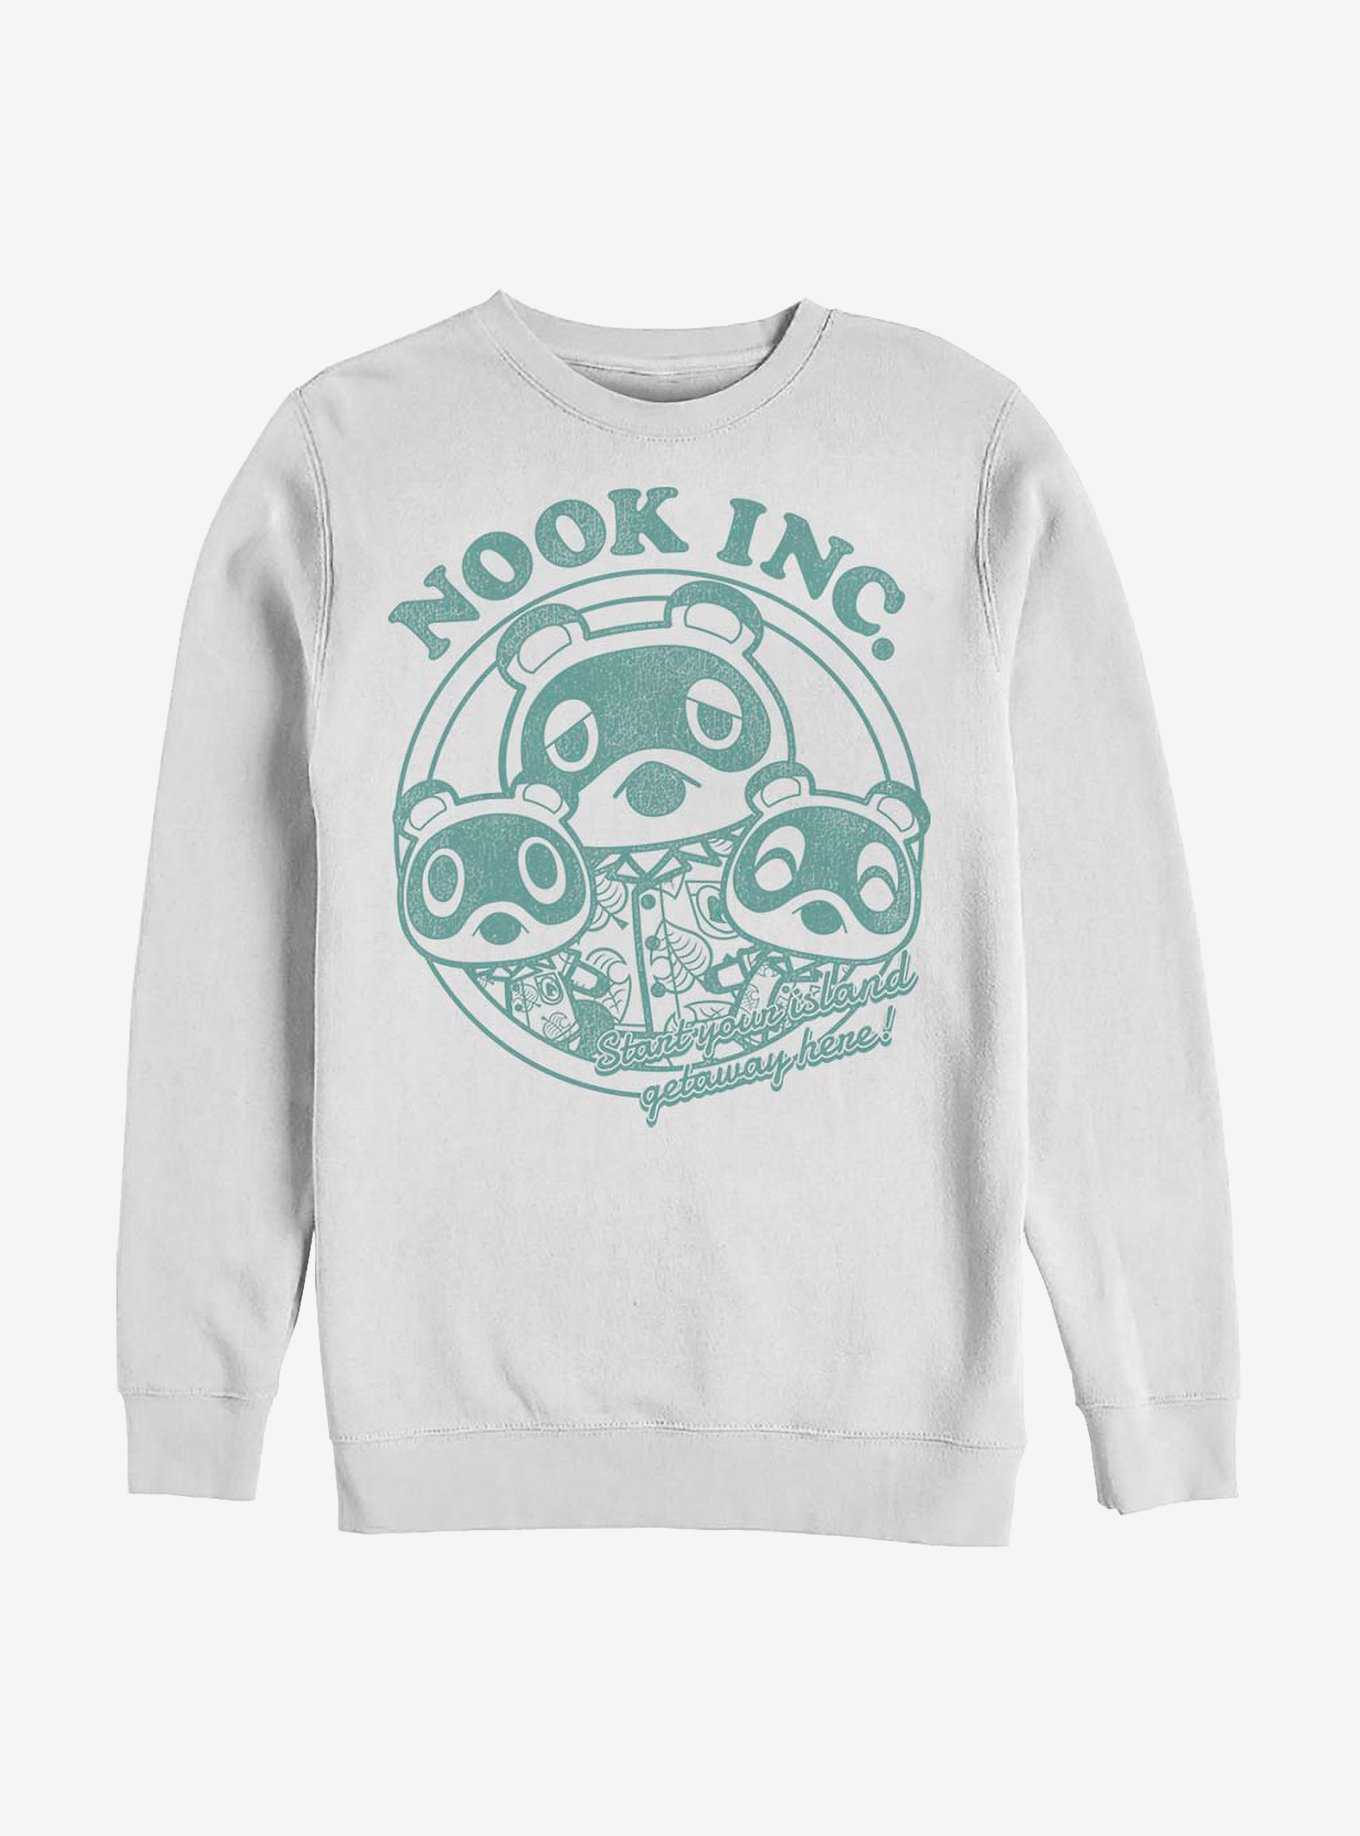 Animal Crossing: New Horizons Nook Inc. Getaway Sweatshirt, , hi-res